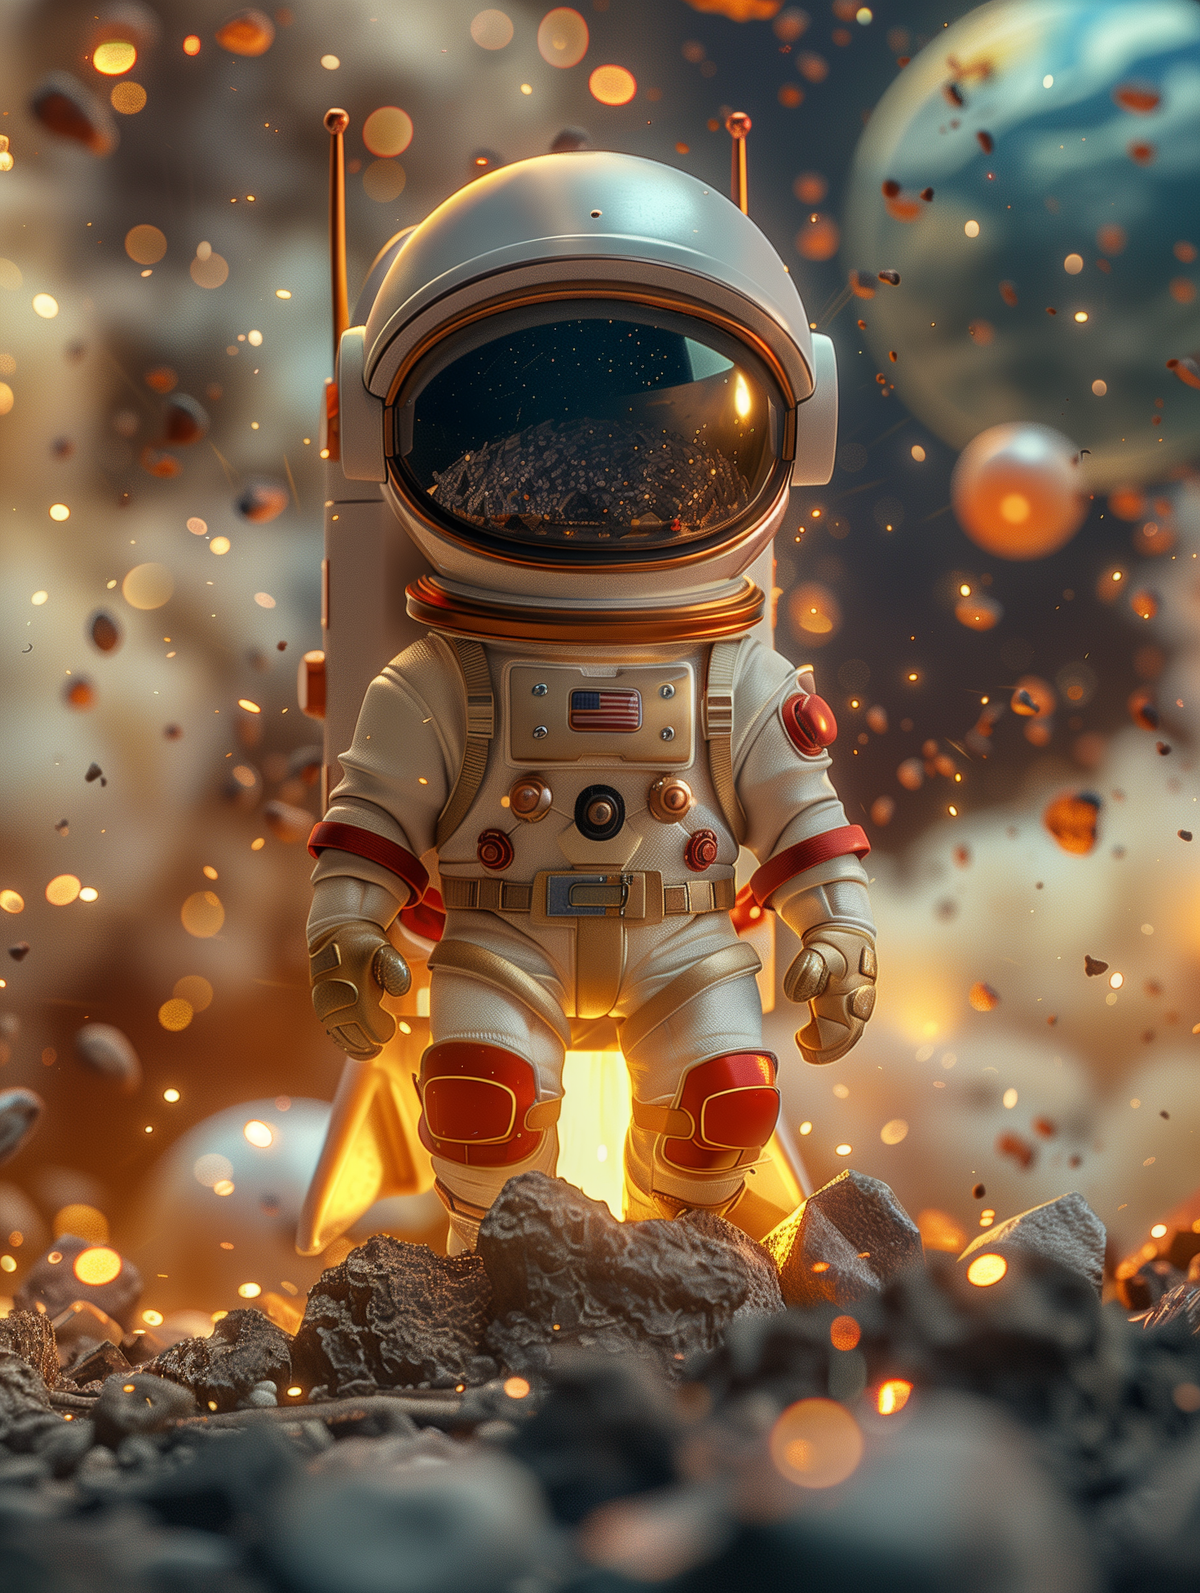 Intrepid Explorer - Astronaut on an Alien World